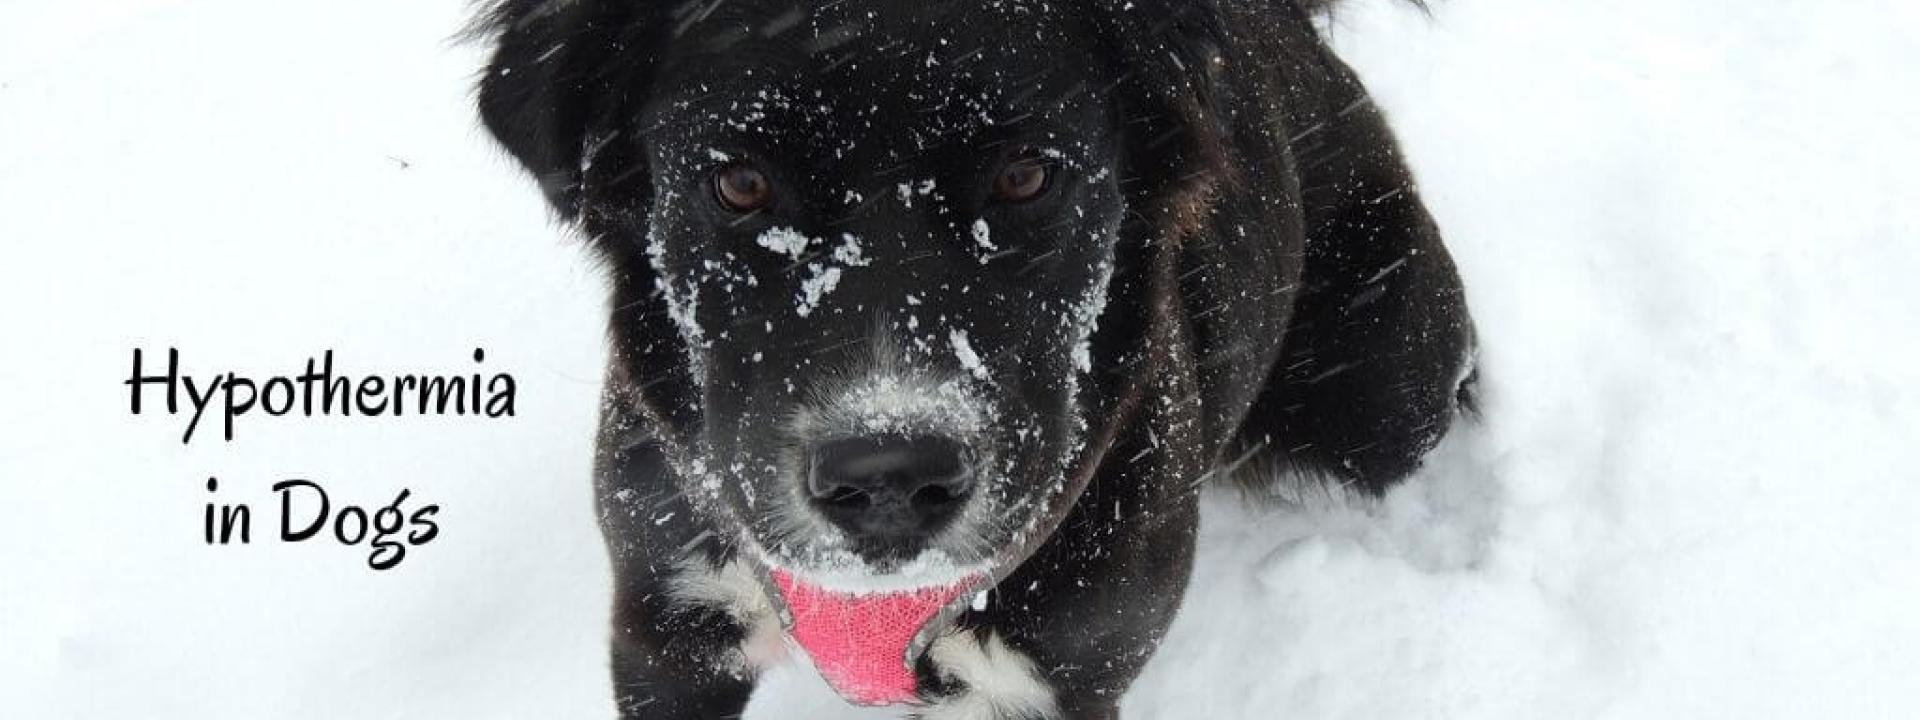 hypothermia-in-dogs-blog-header.jpg